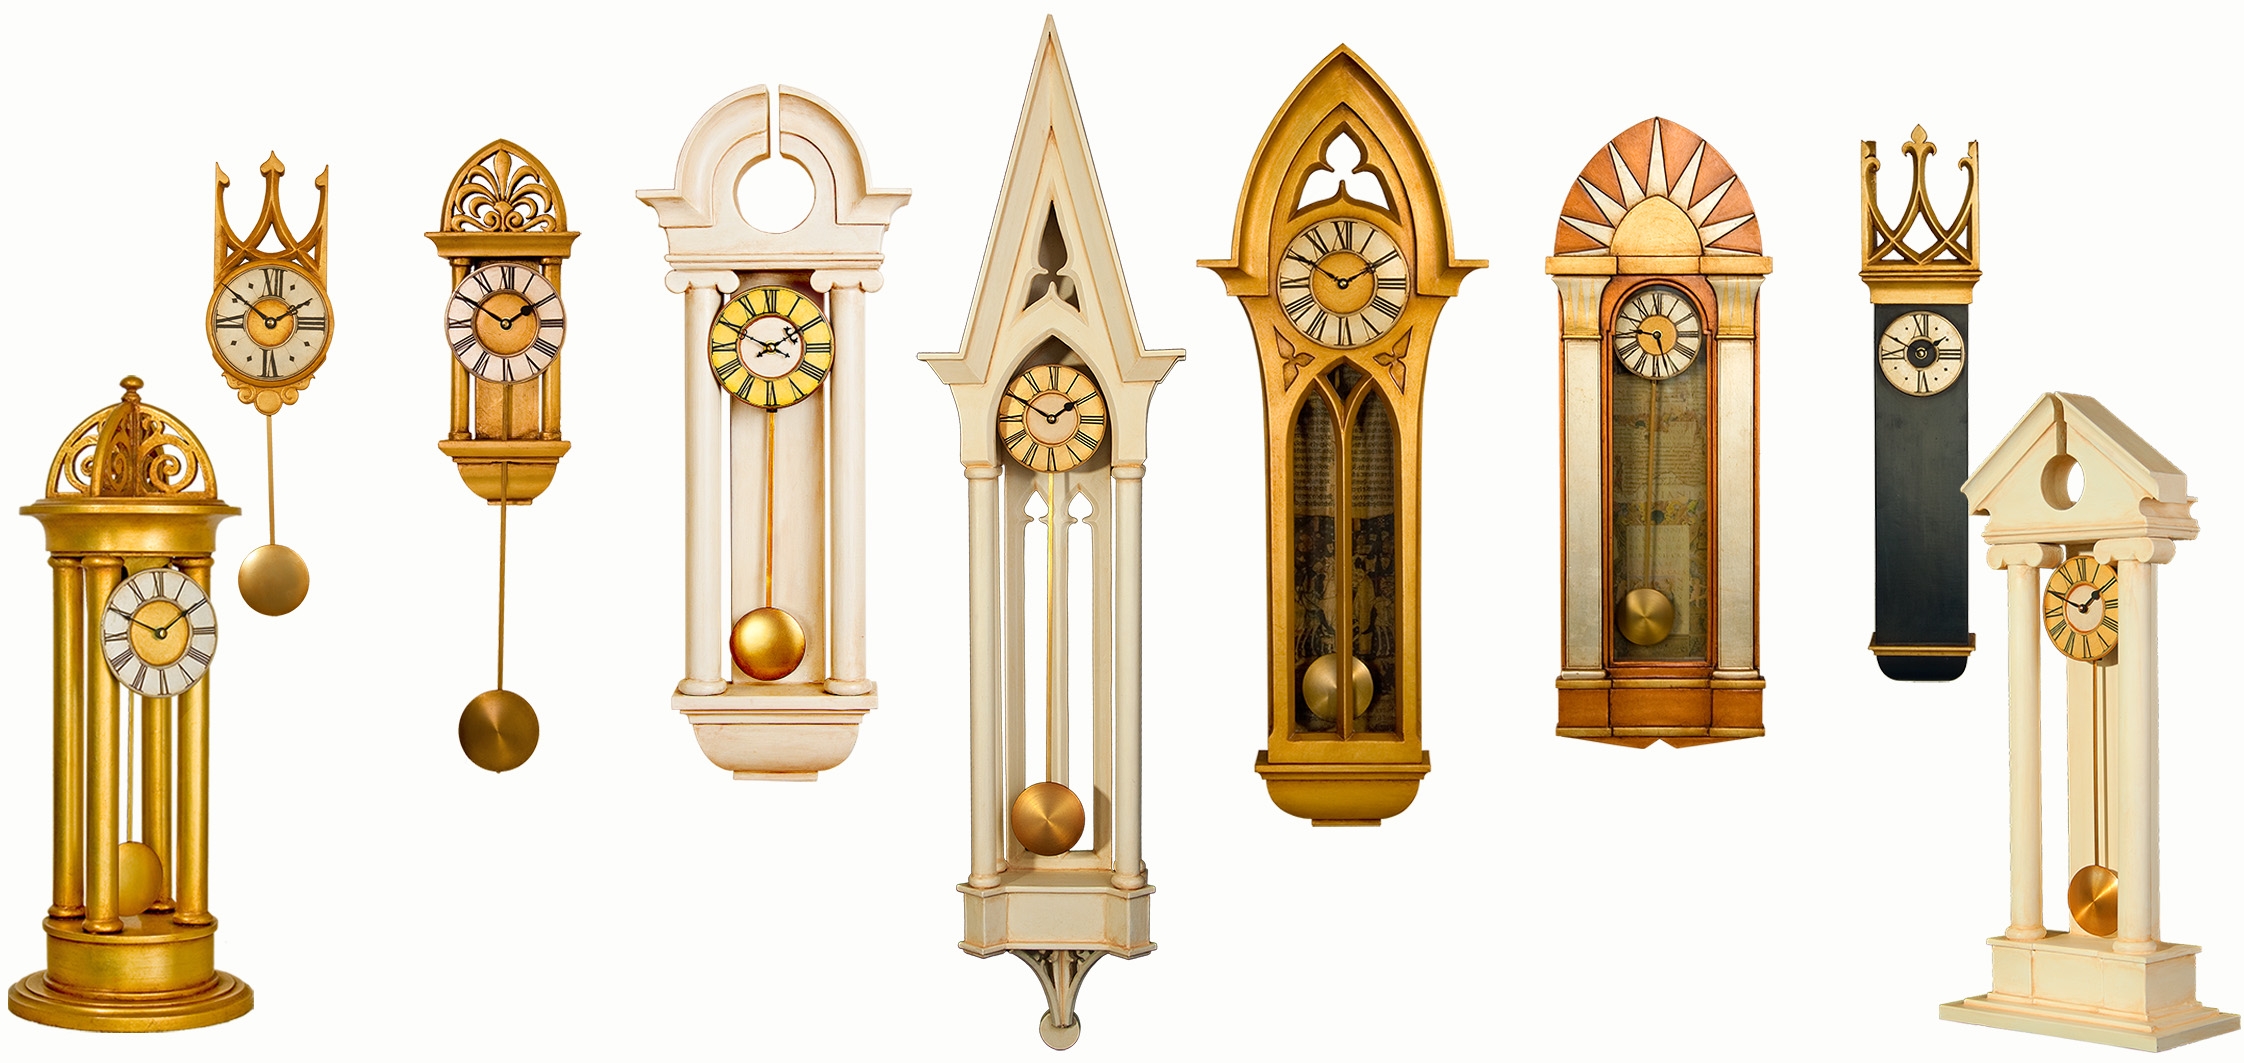 A stunning selection of my handmade pendulum clocks